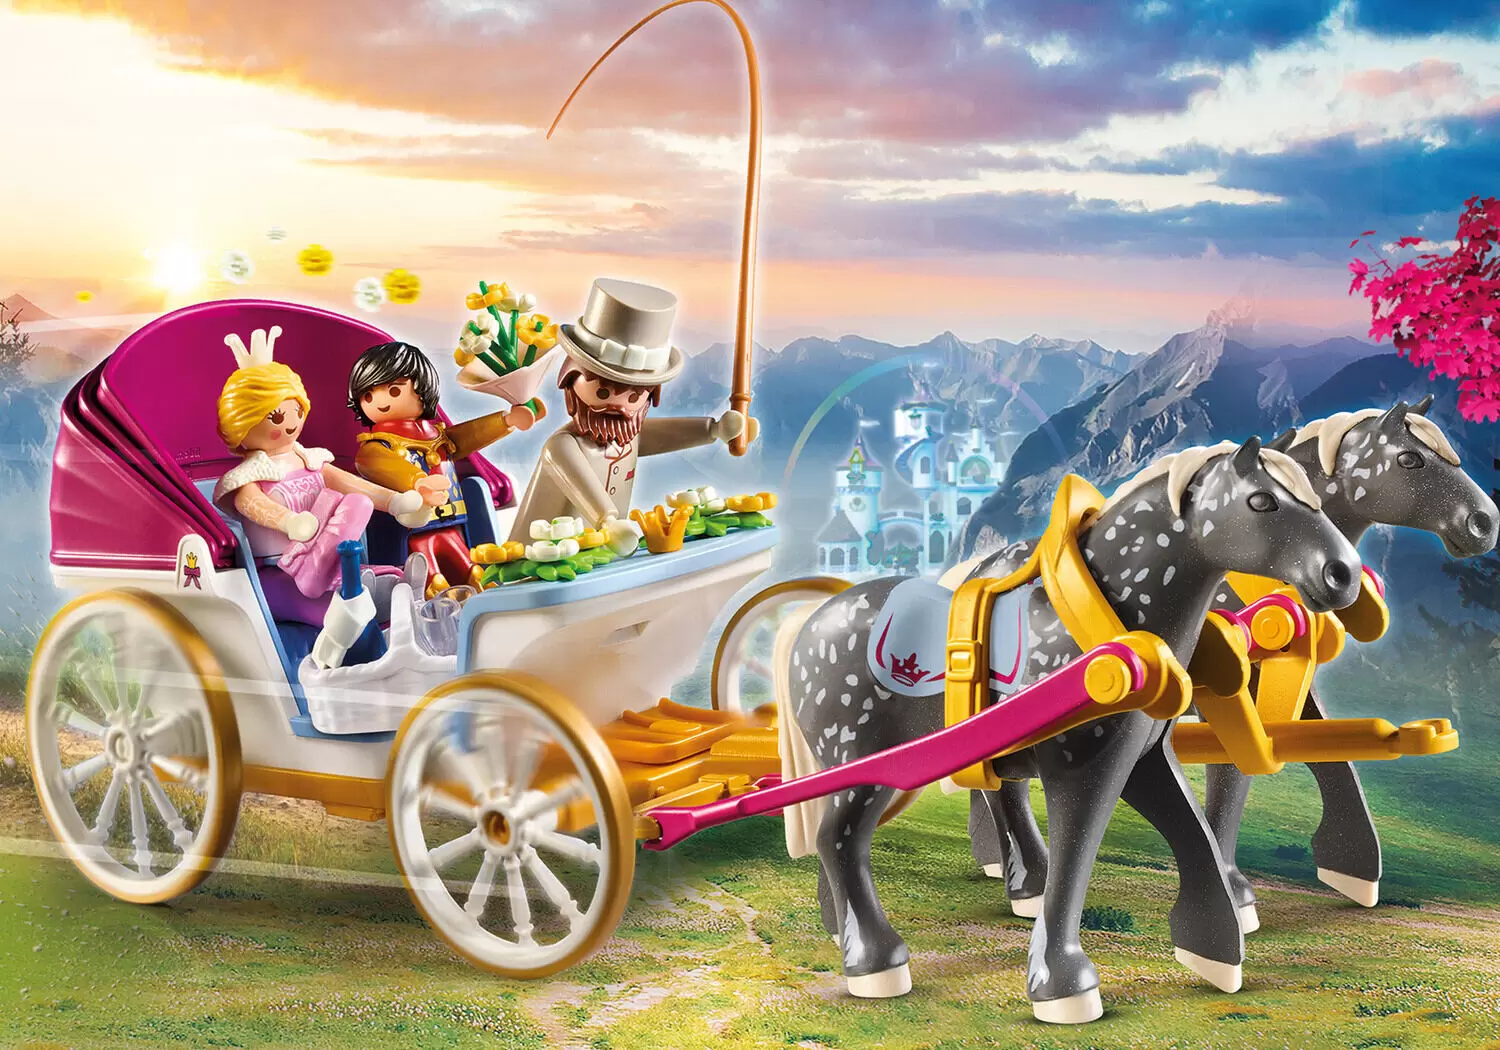 Playmobil Princess - Romantic Horse Carriage